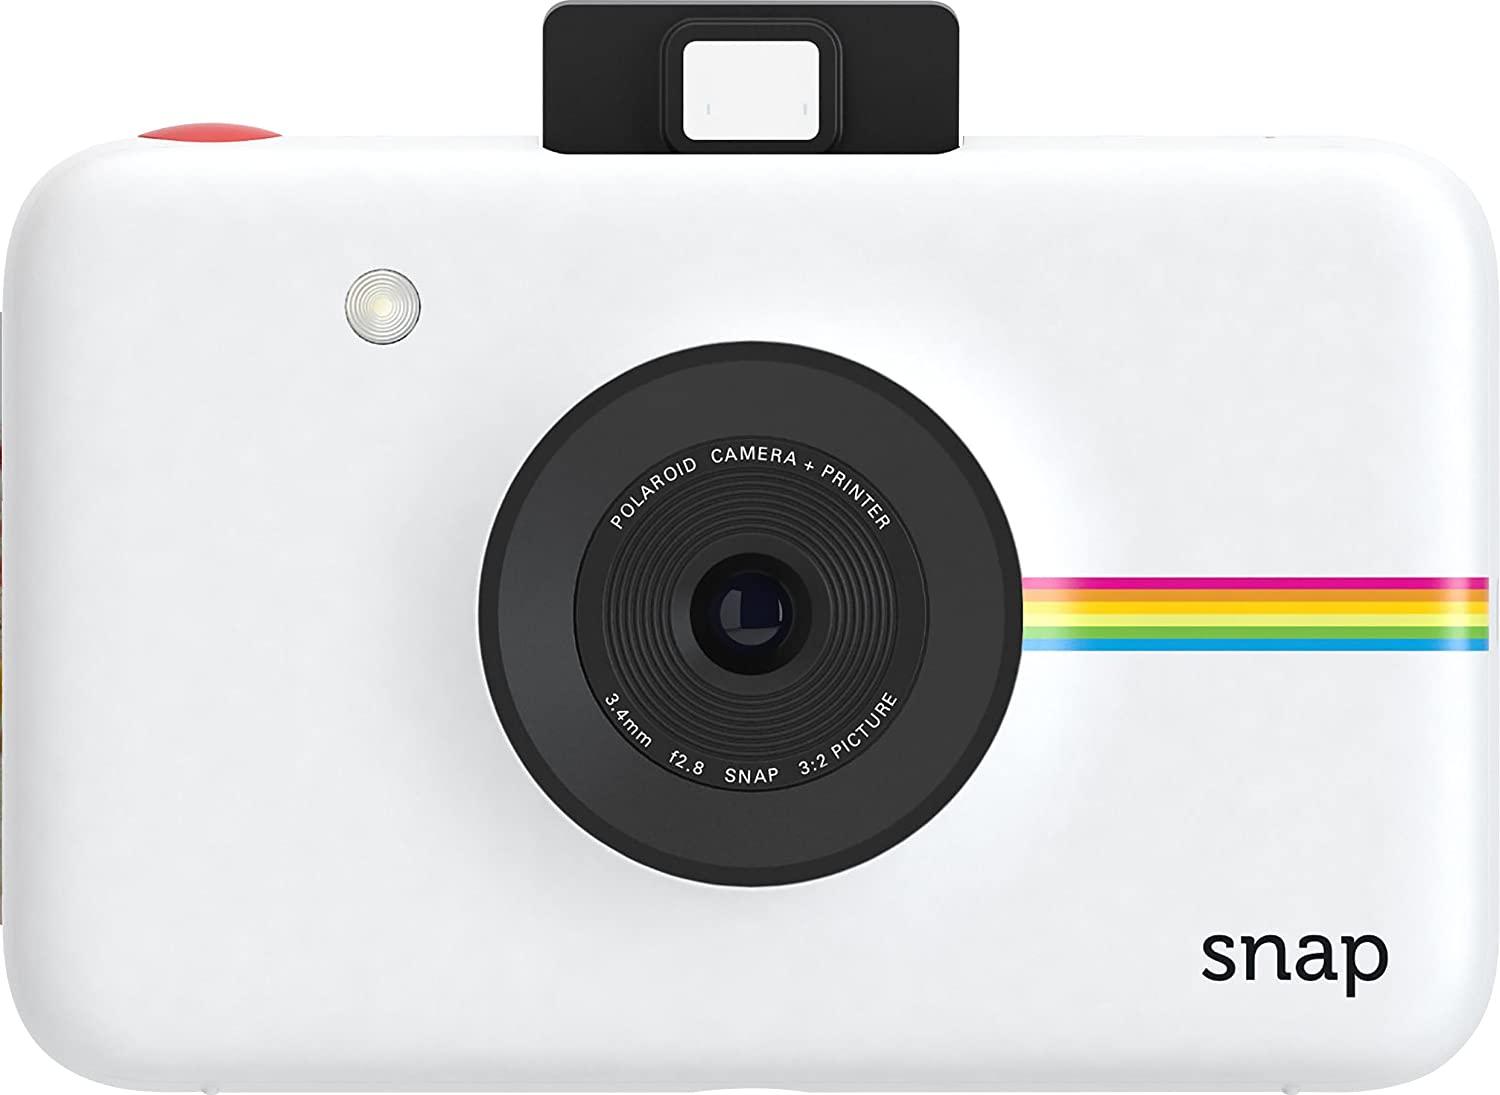 Zink Polaroid Snap Instant Digital Camera (White) with ZINK Zero